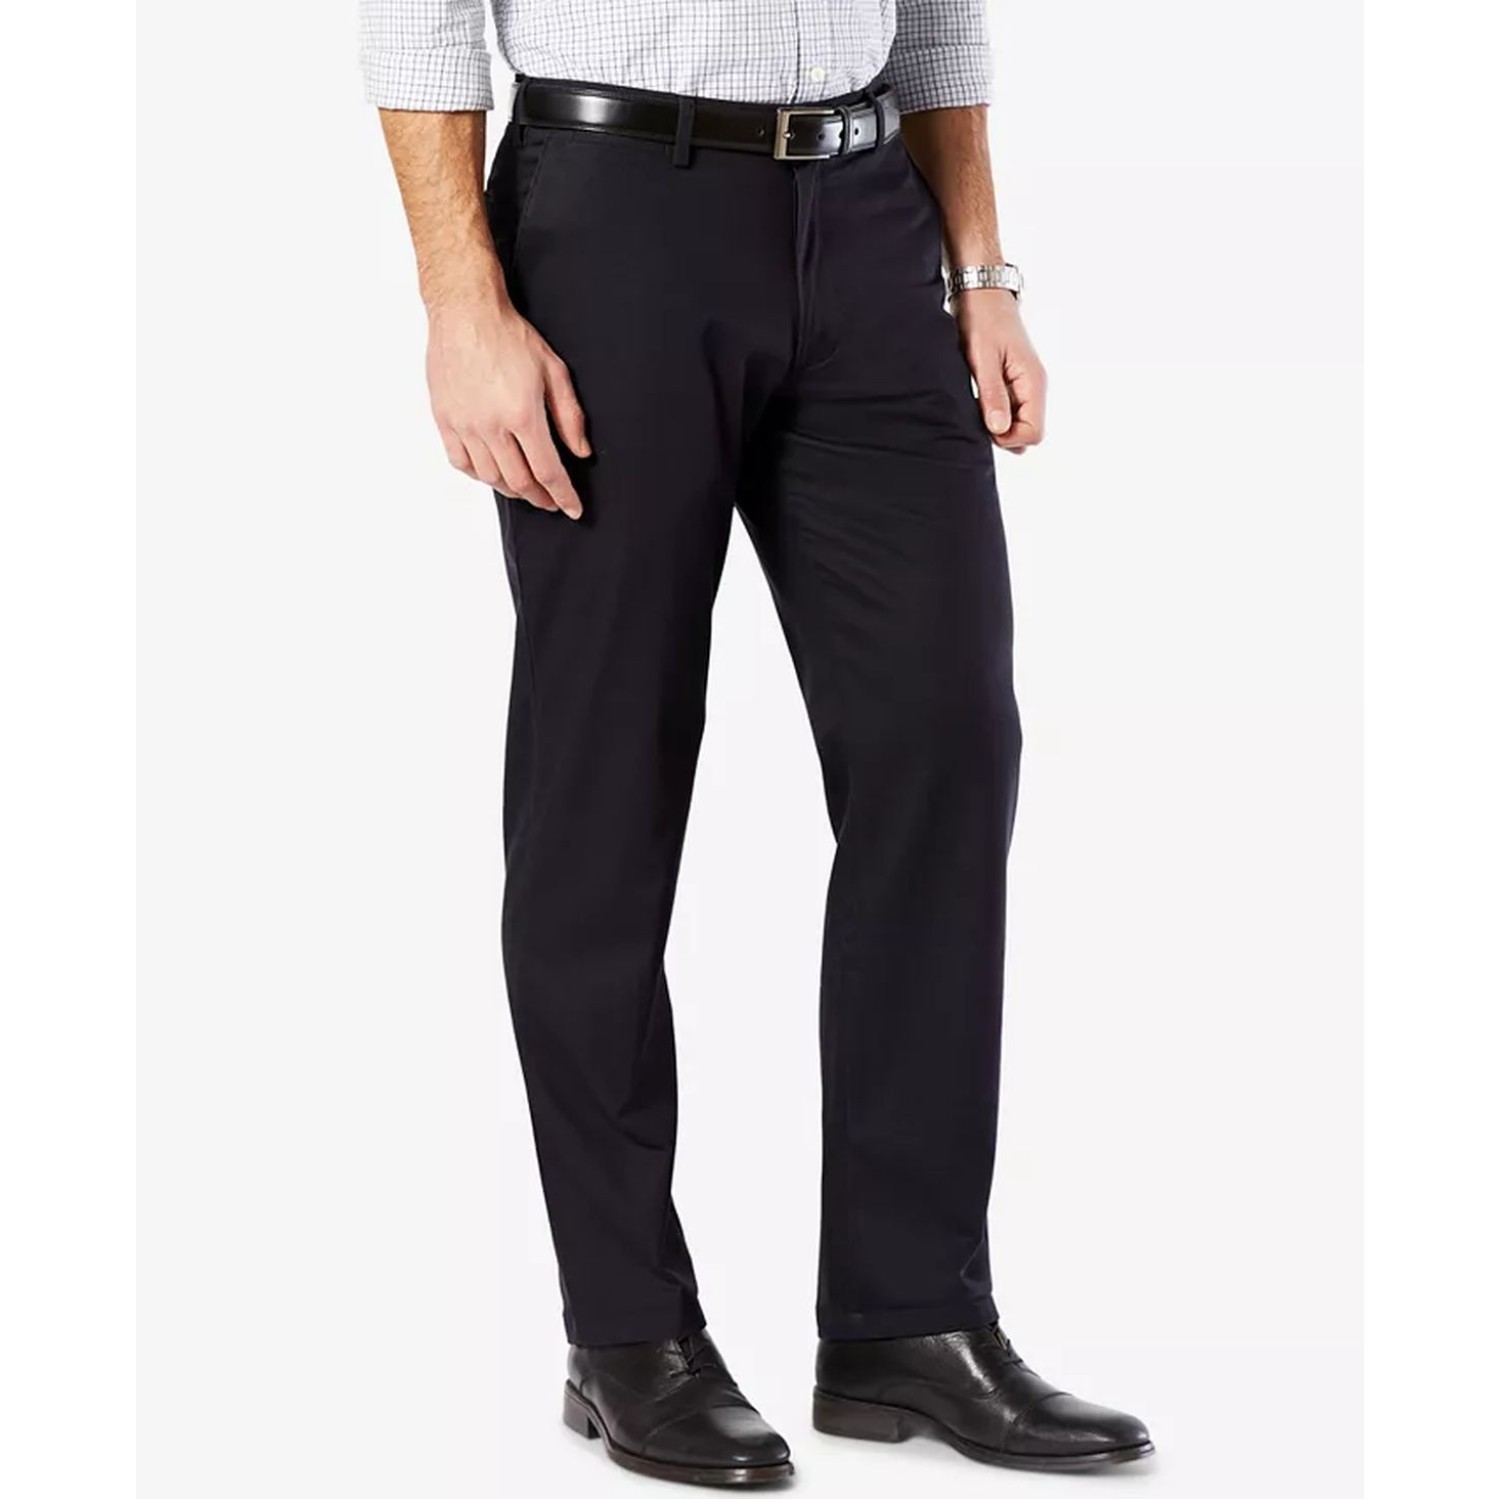 Dockers Mens’ Signature Lux Cotton Straight Fit Stretch Khaki Pants